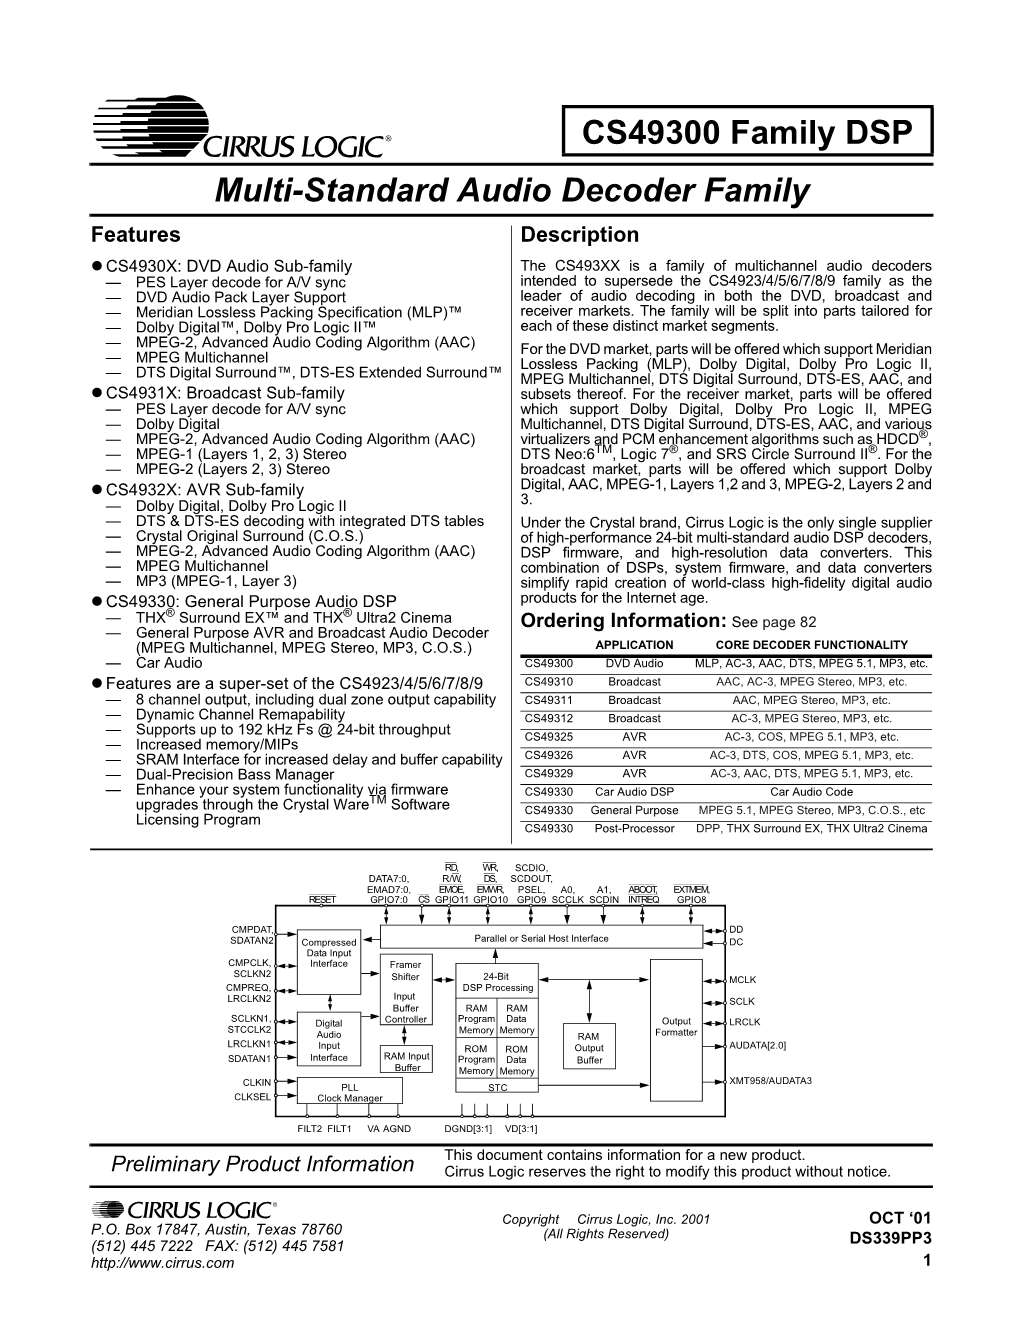 CS49300 Family DSP Multi-Standard Audio